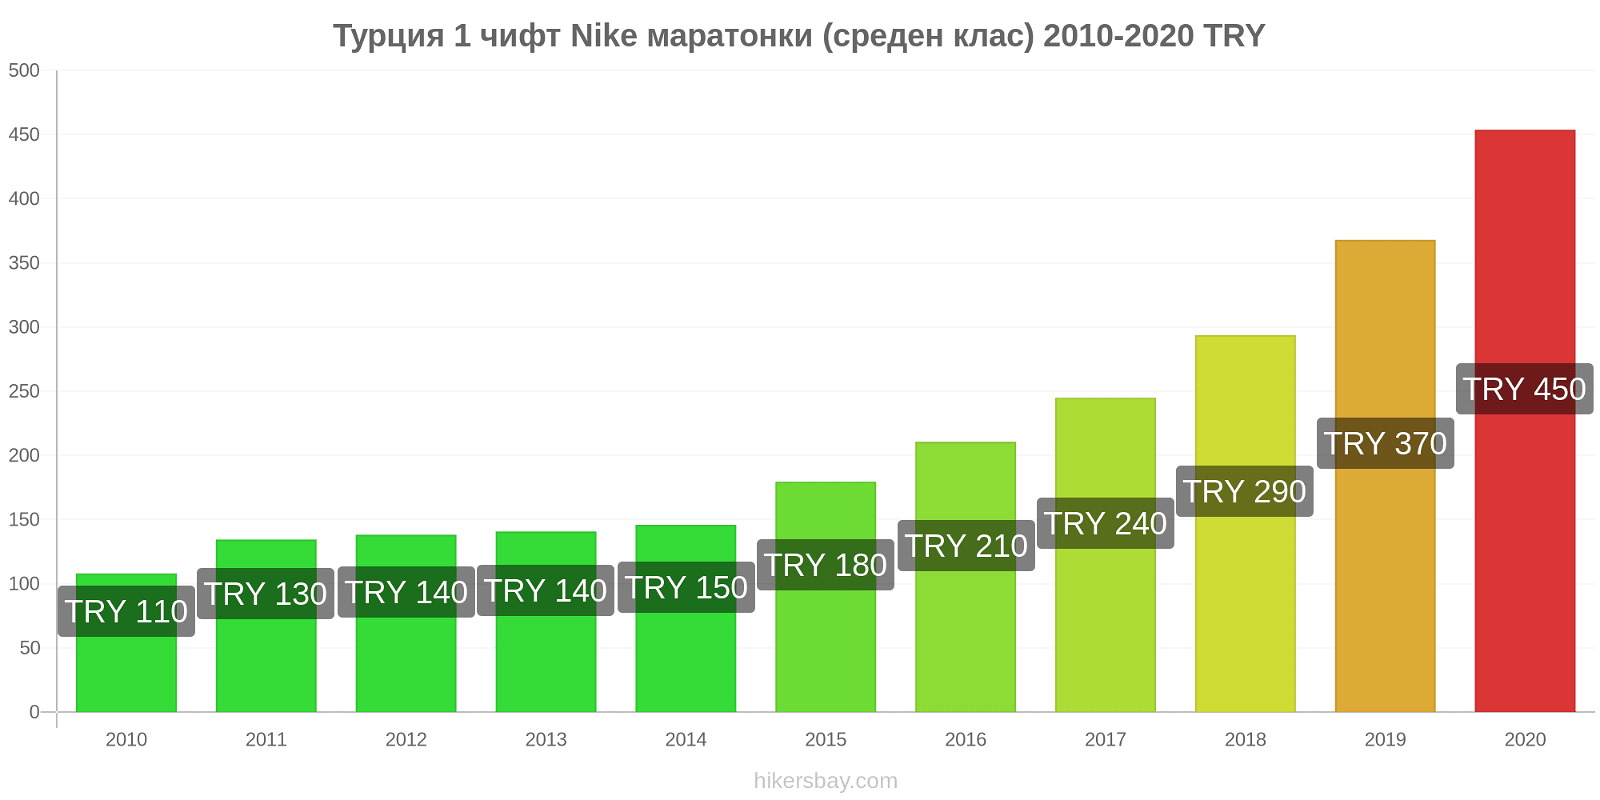 Турция ценови промени 1 чифт Nike маратонки (среден клас) hikersbay.com